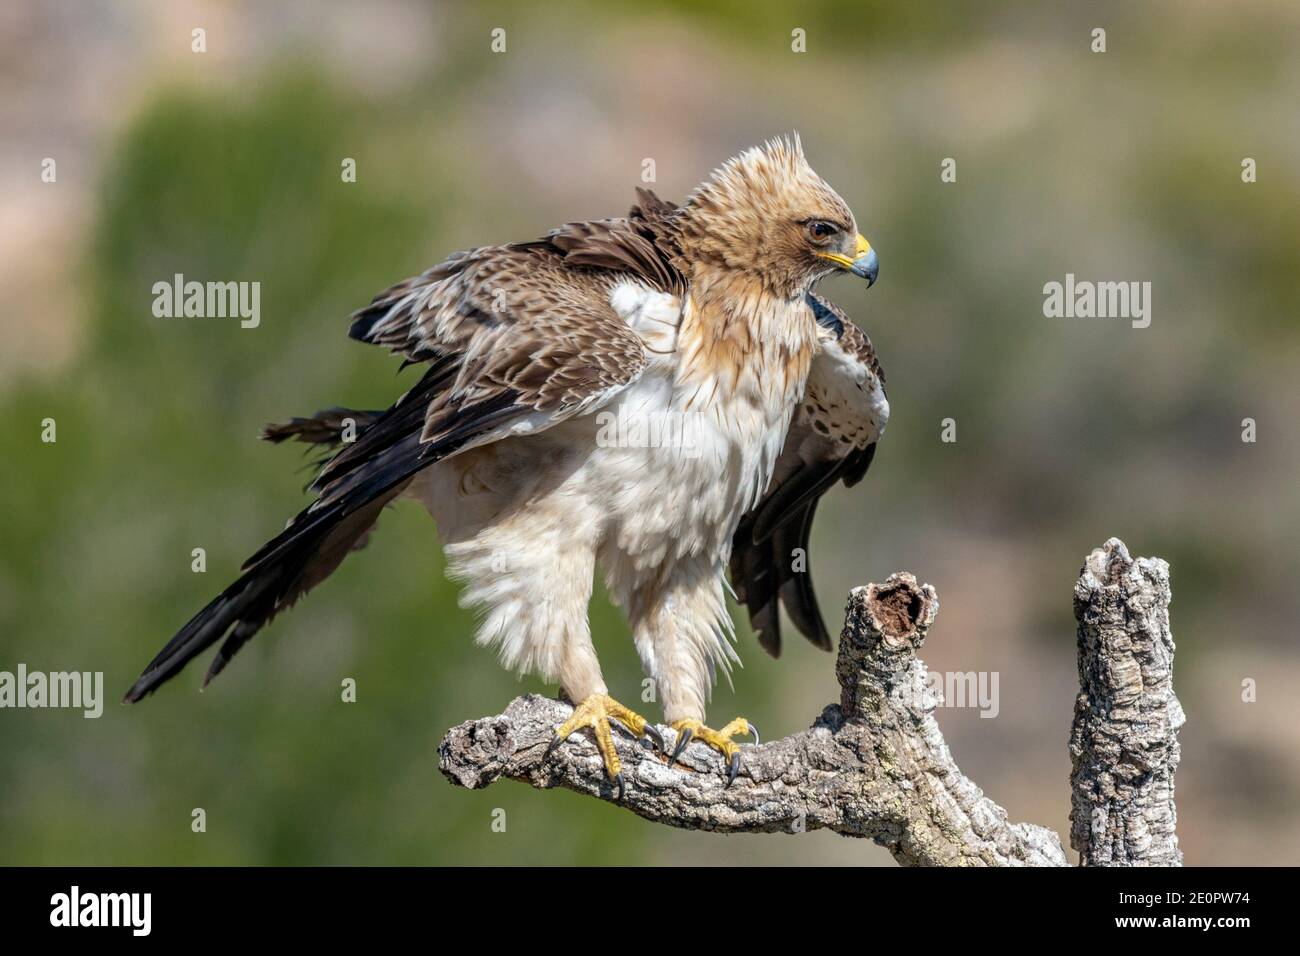 Booted eagle (Hieraaetus pennatus), shaking feathers Stock Photo